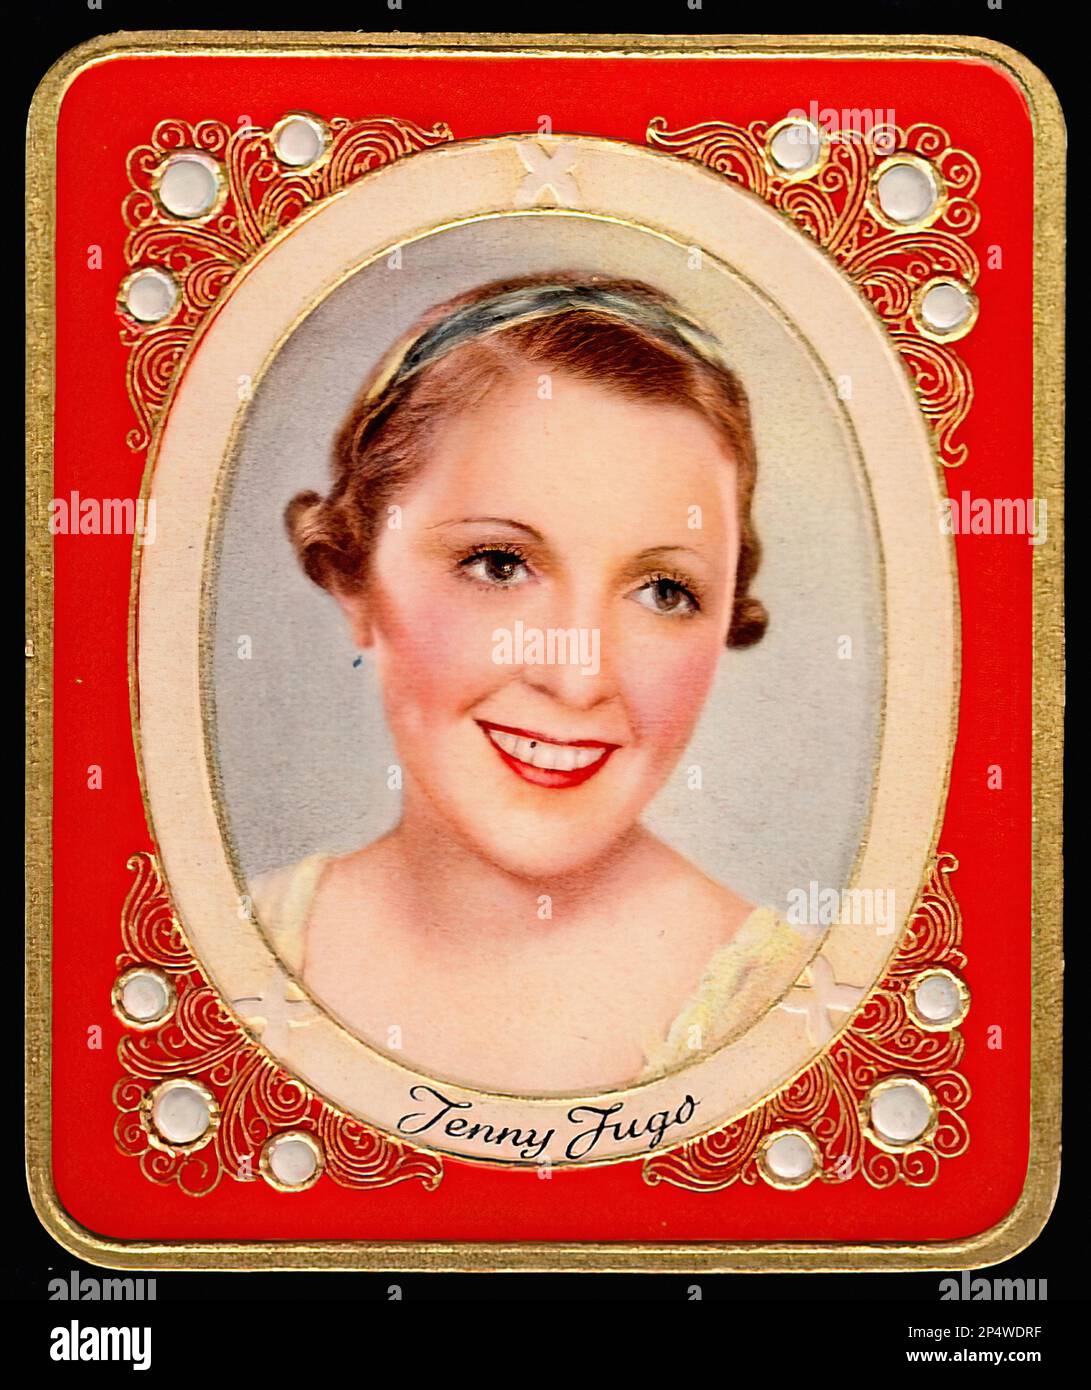 Portrait of Jenny Jugo  - Vintage German Cigarette Card Stock Photo